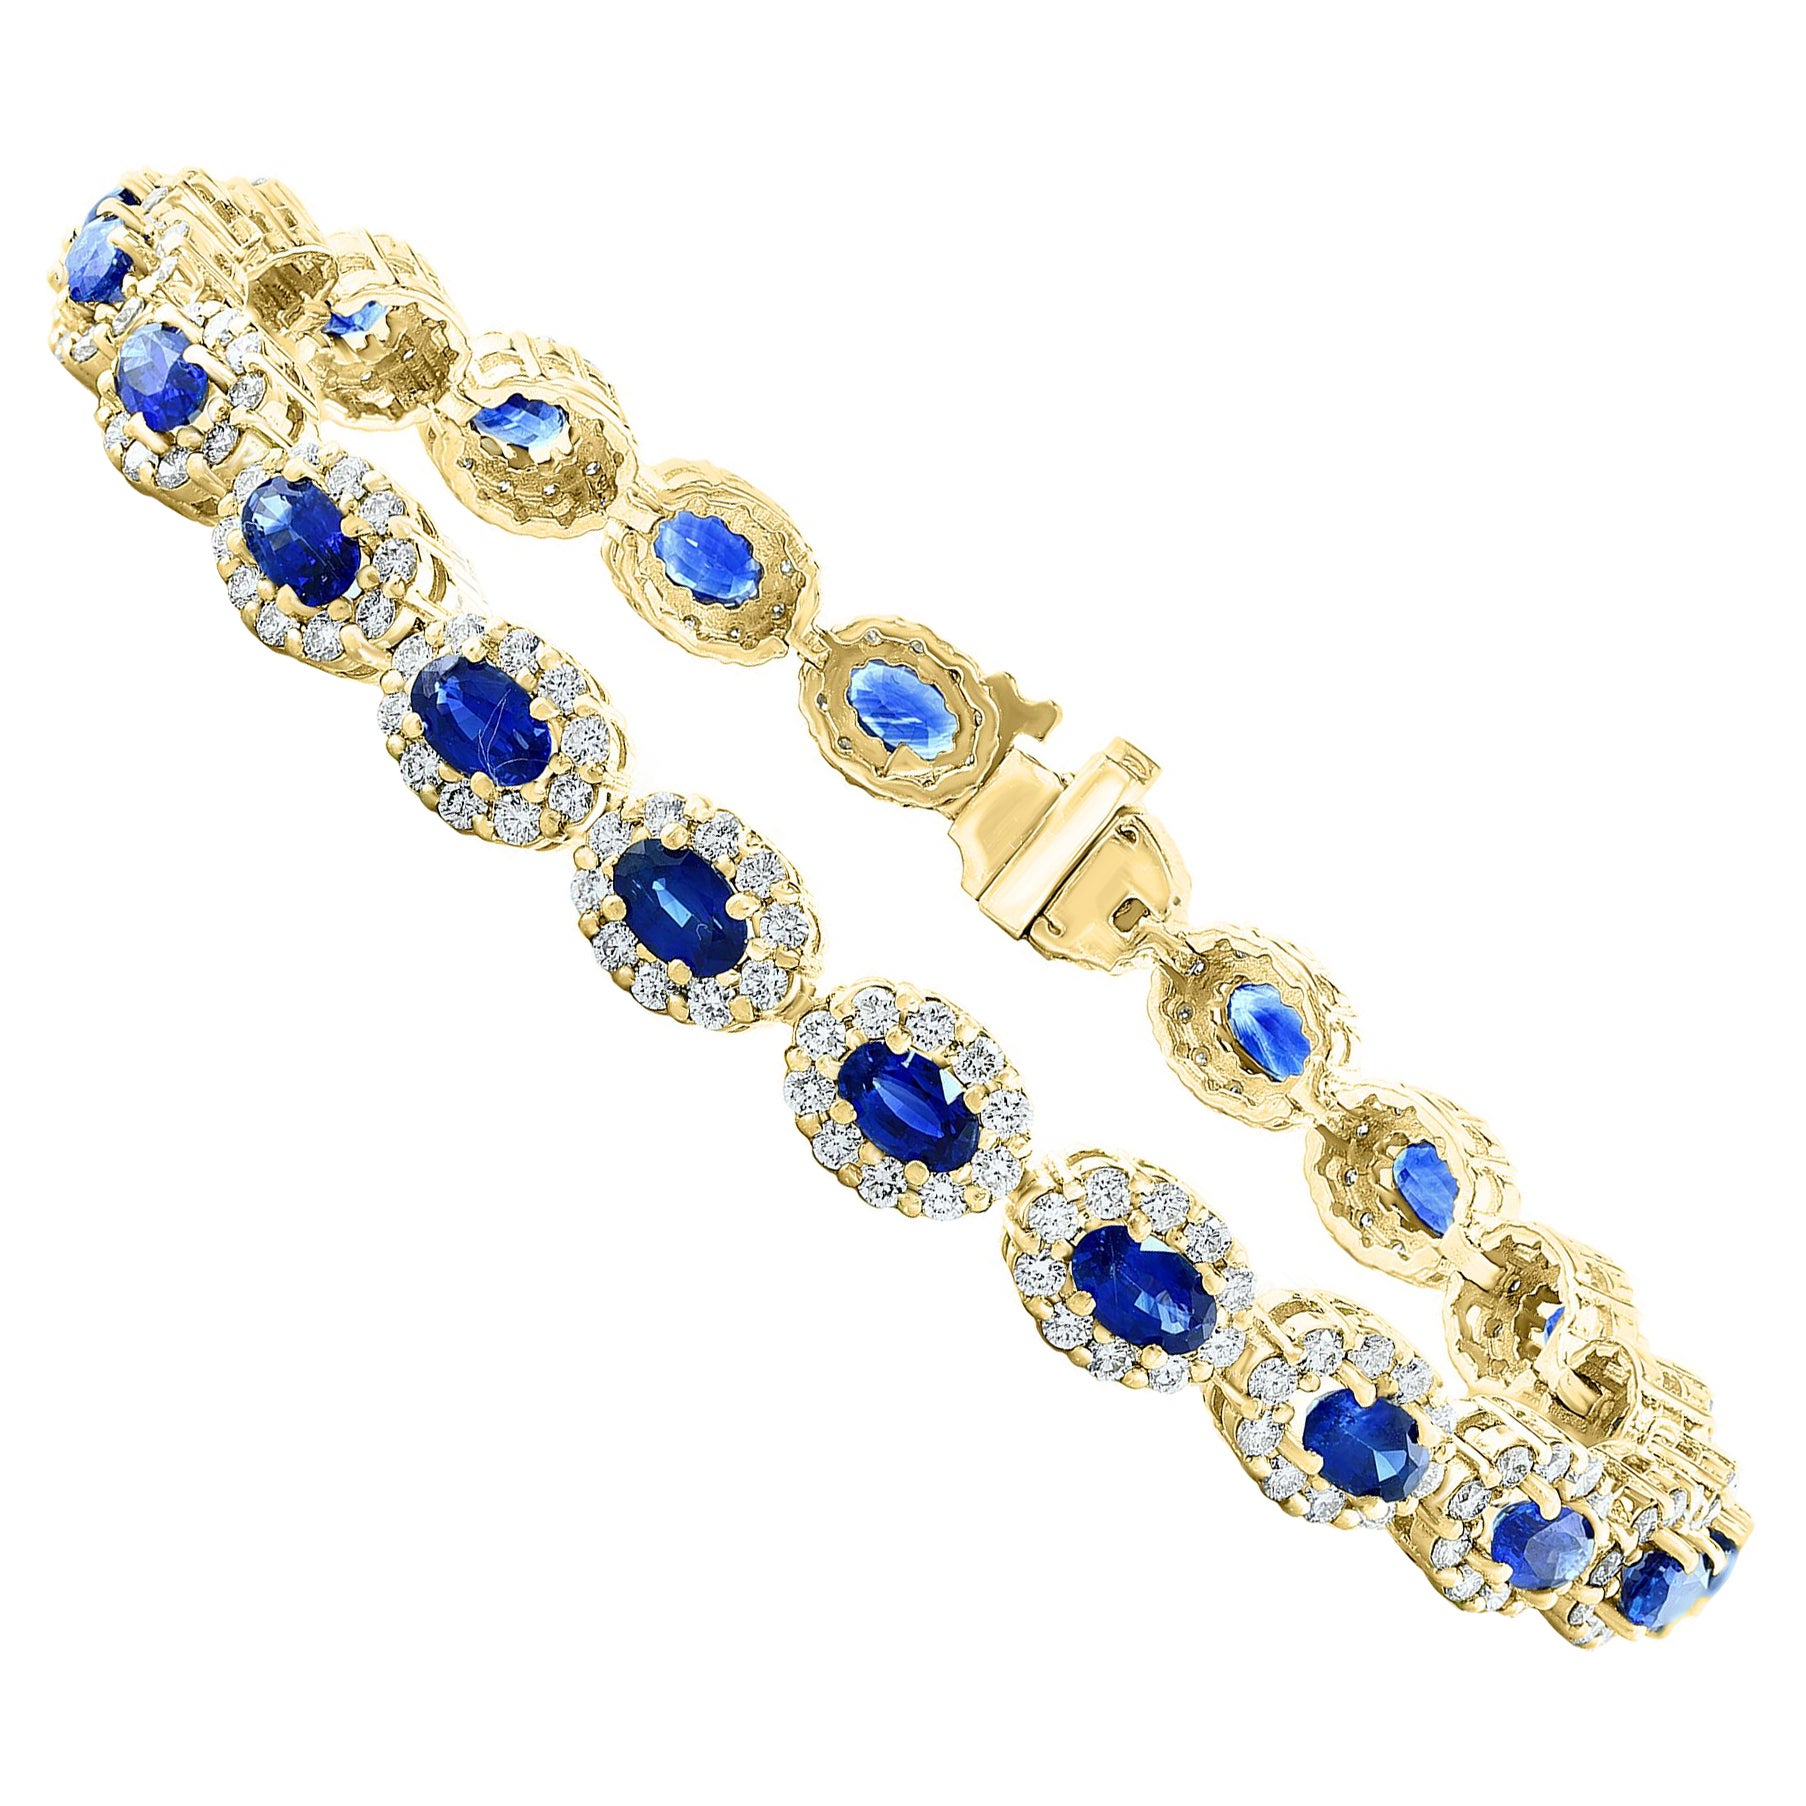 6.24 Carat Oval Cut Blue Sapphire and Diamond Halo Bracelet in 14K Yellow Gold